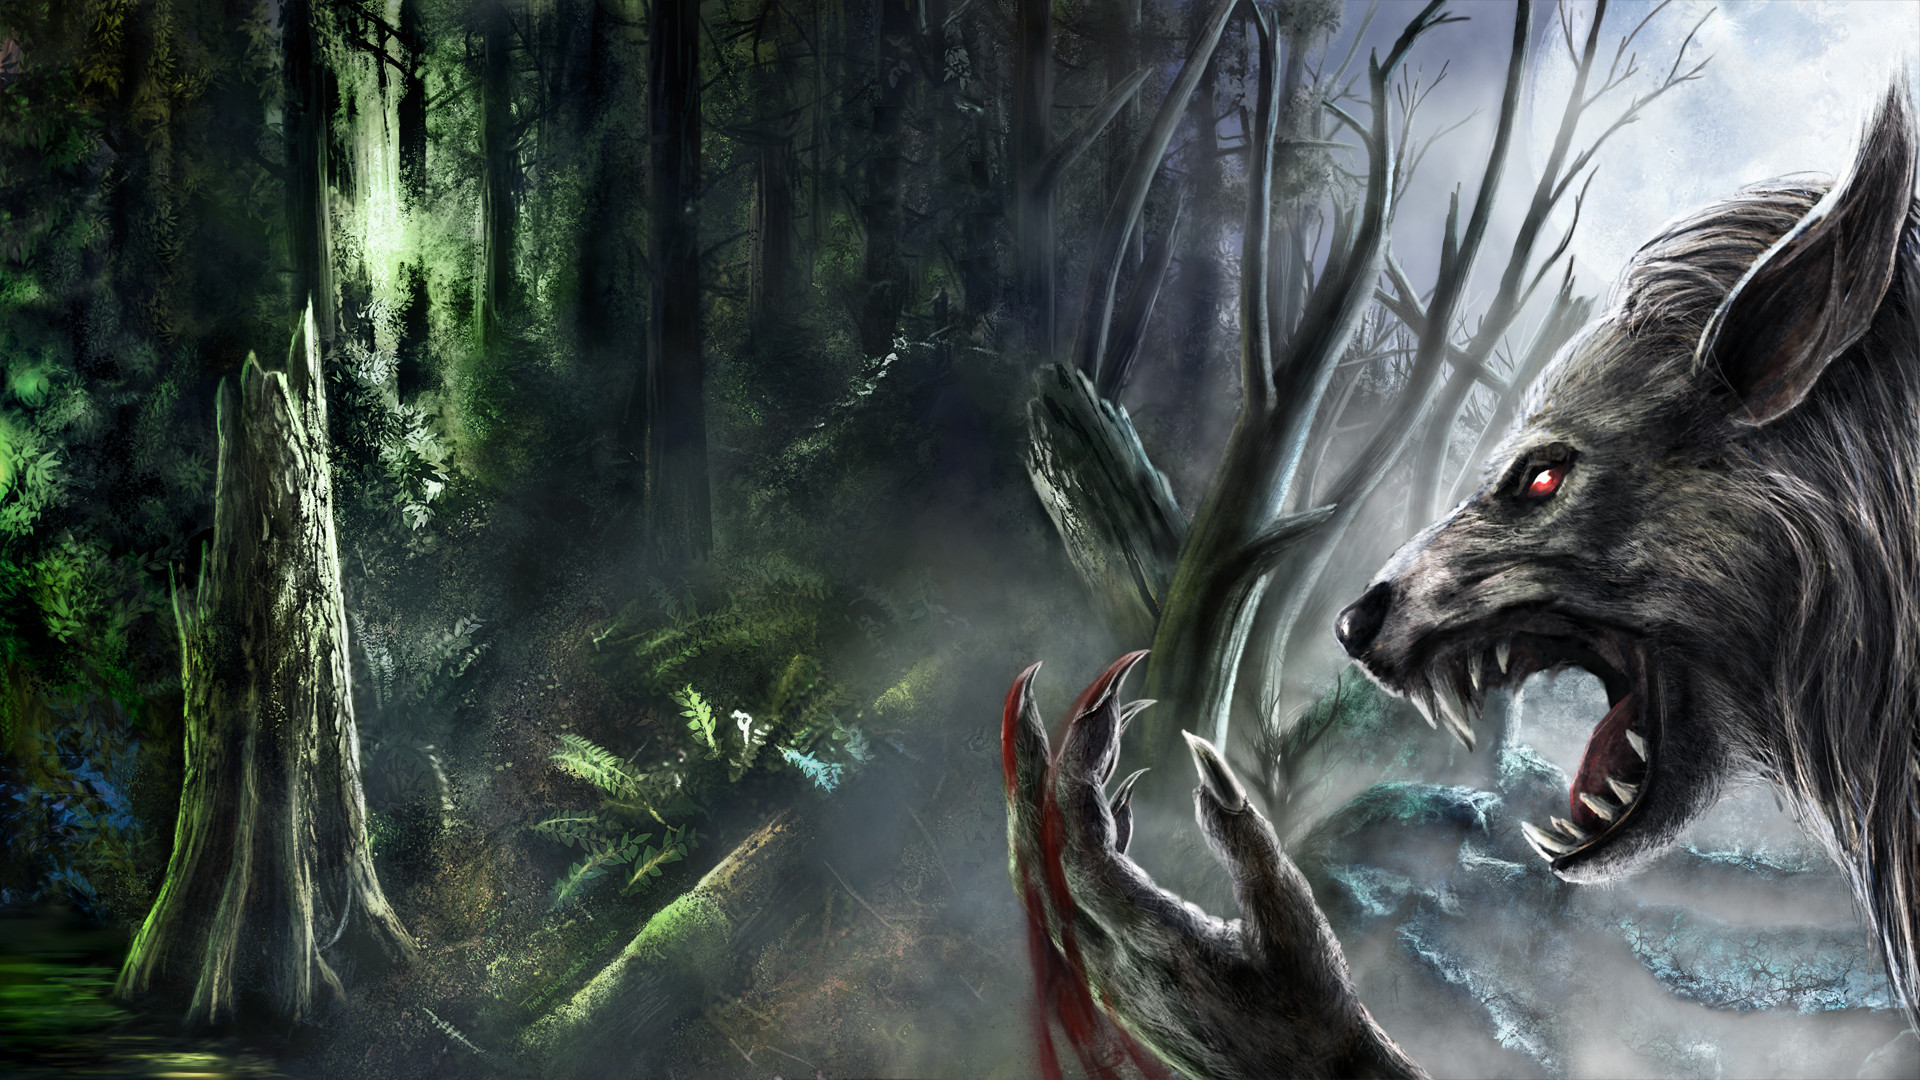 Werewolf fantasy art dark monster creatures blood fangs trees forest spooky  creepy scary evil wallpaper |